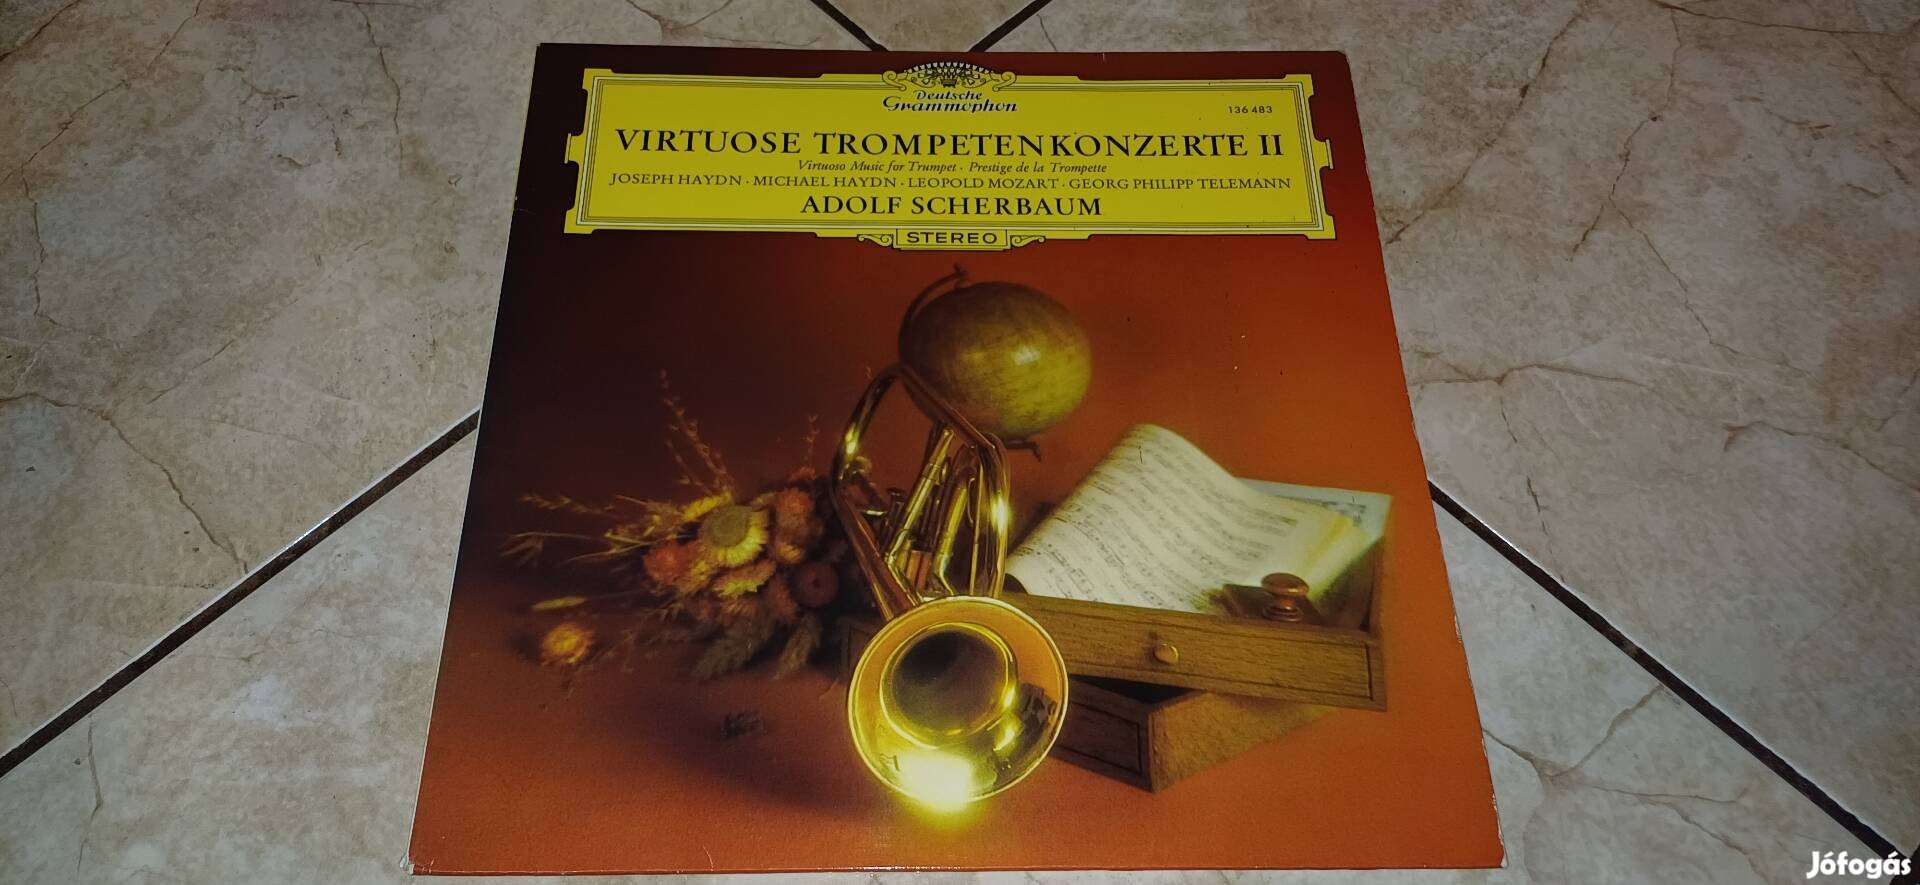 Virtuose Trompeten bakelit lemez